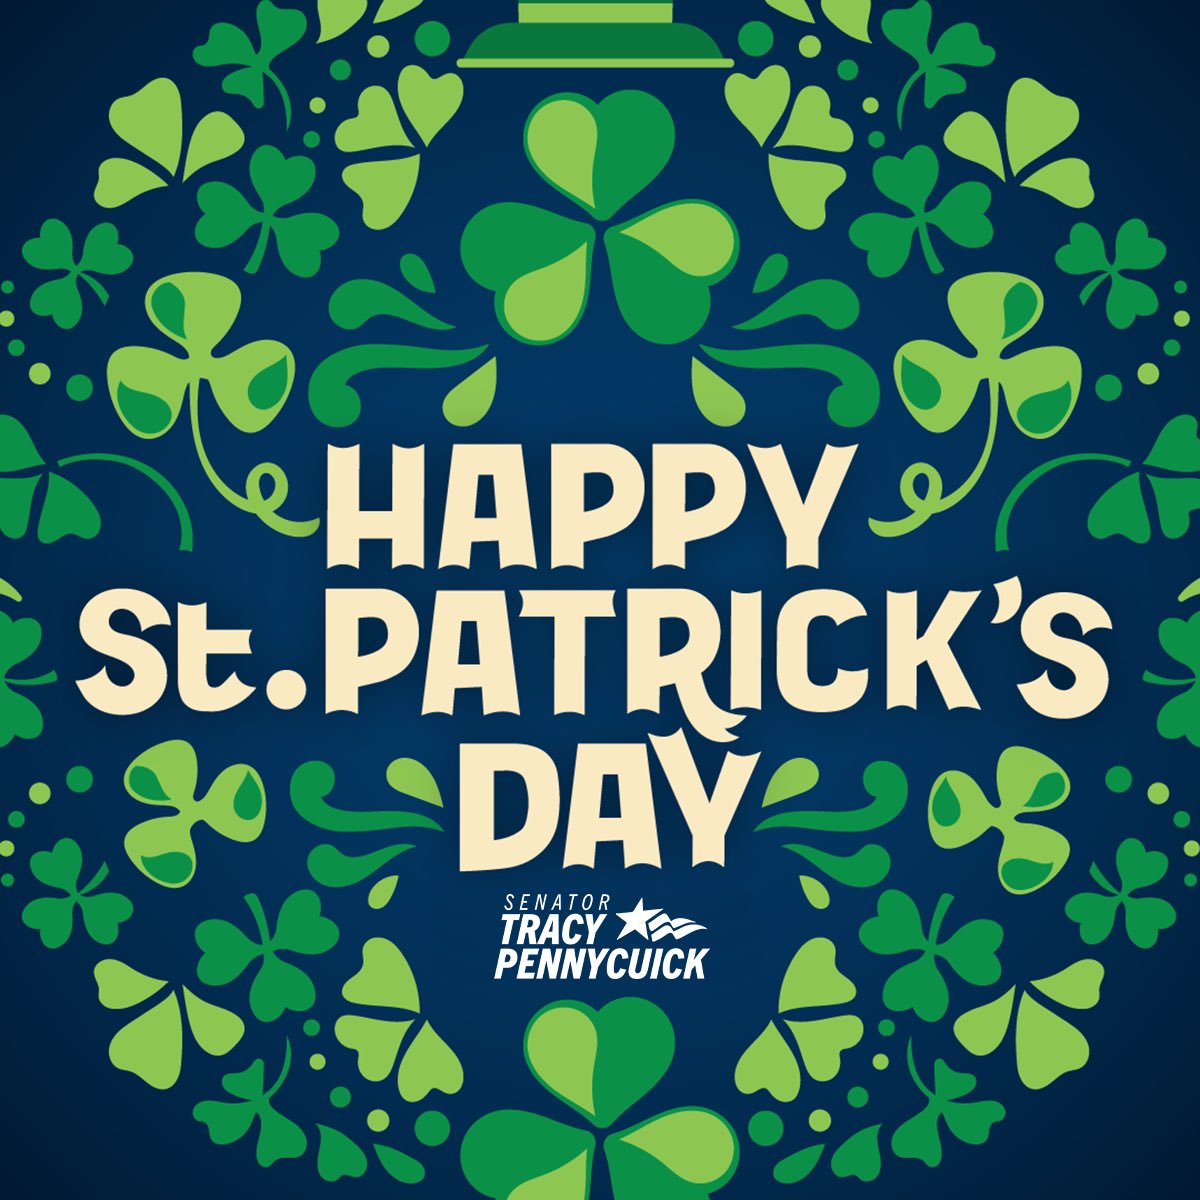 ☘️ Wishing a happy St. Patrick's Day to all those celebrating! ☘️

#HappySaintPatricksDay #happystpaddysday